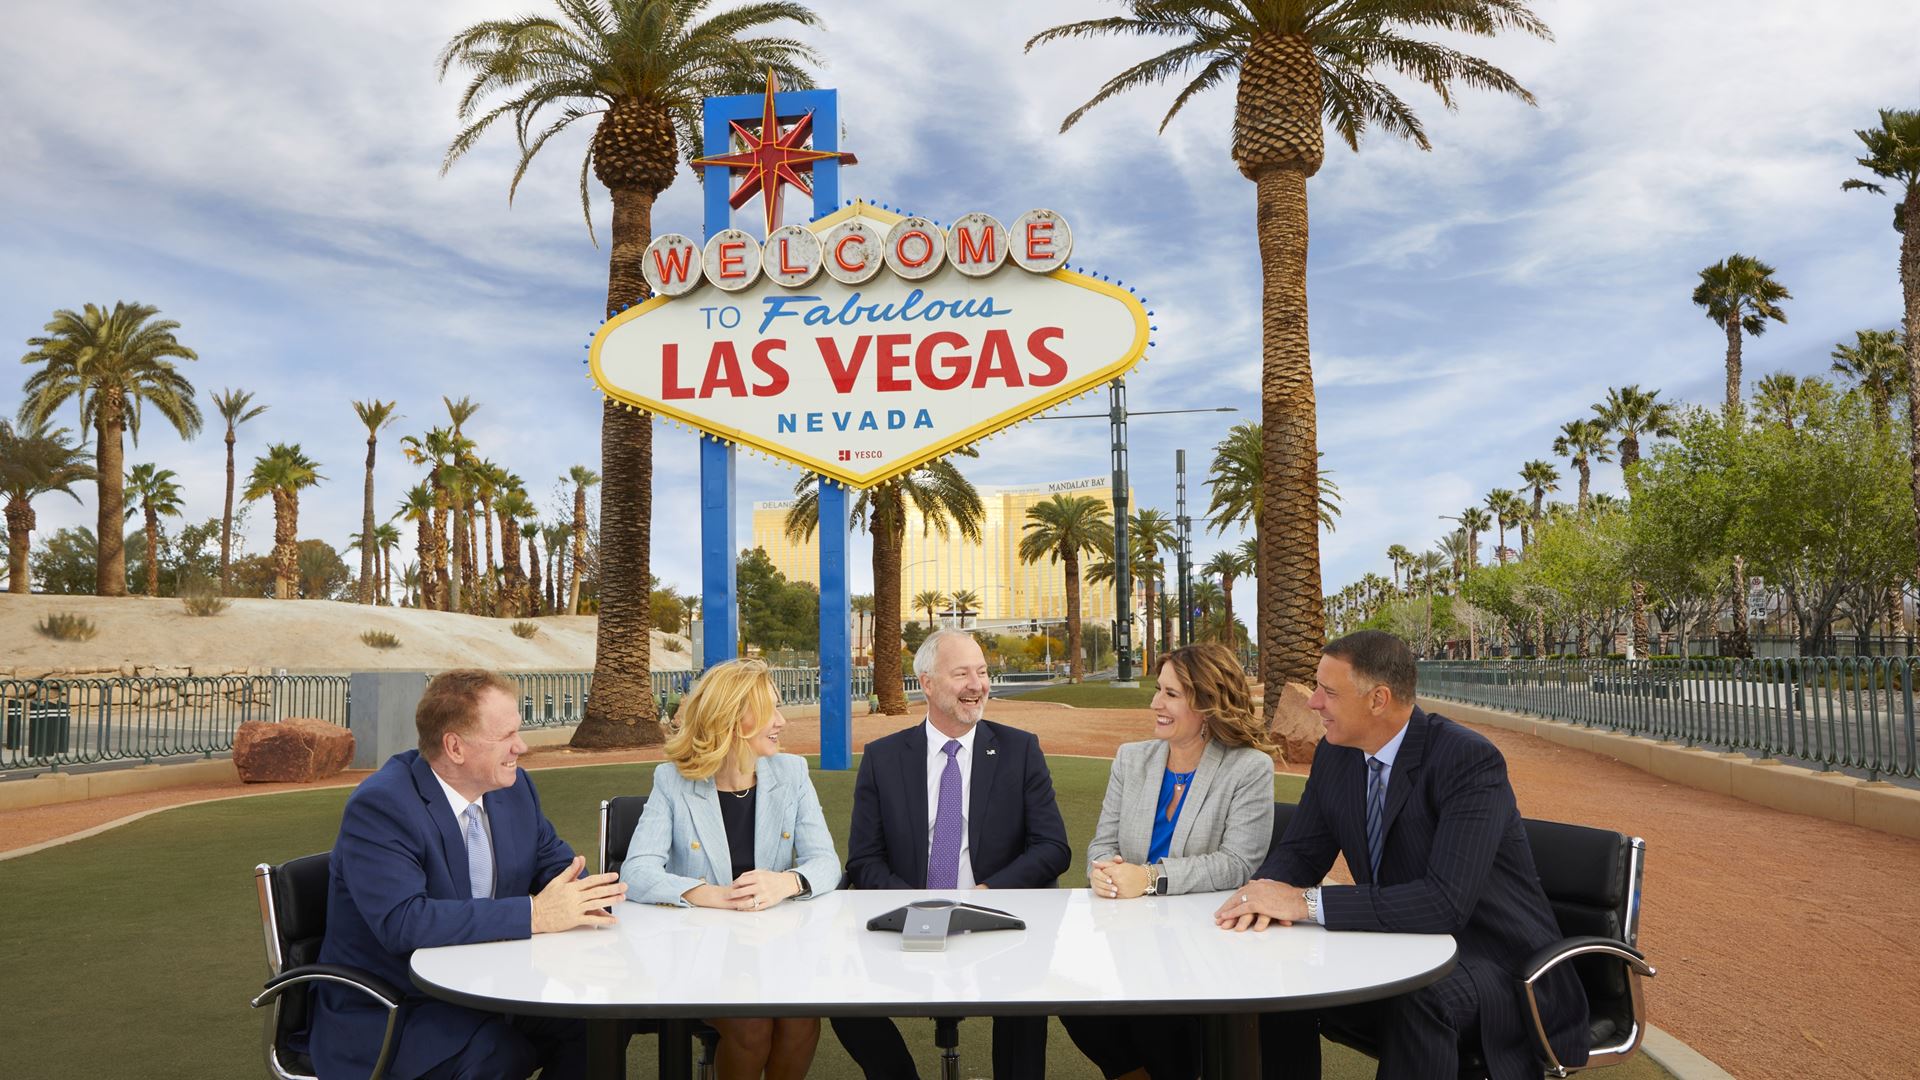 C-SUITE SPOTLIGHT: Q&A with Las Vegas Convention and Visitors